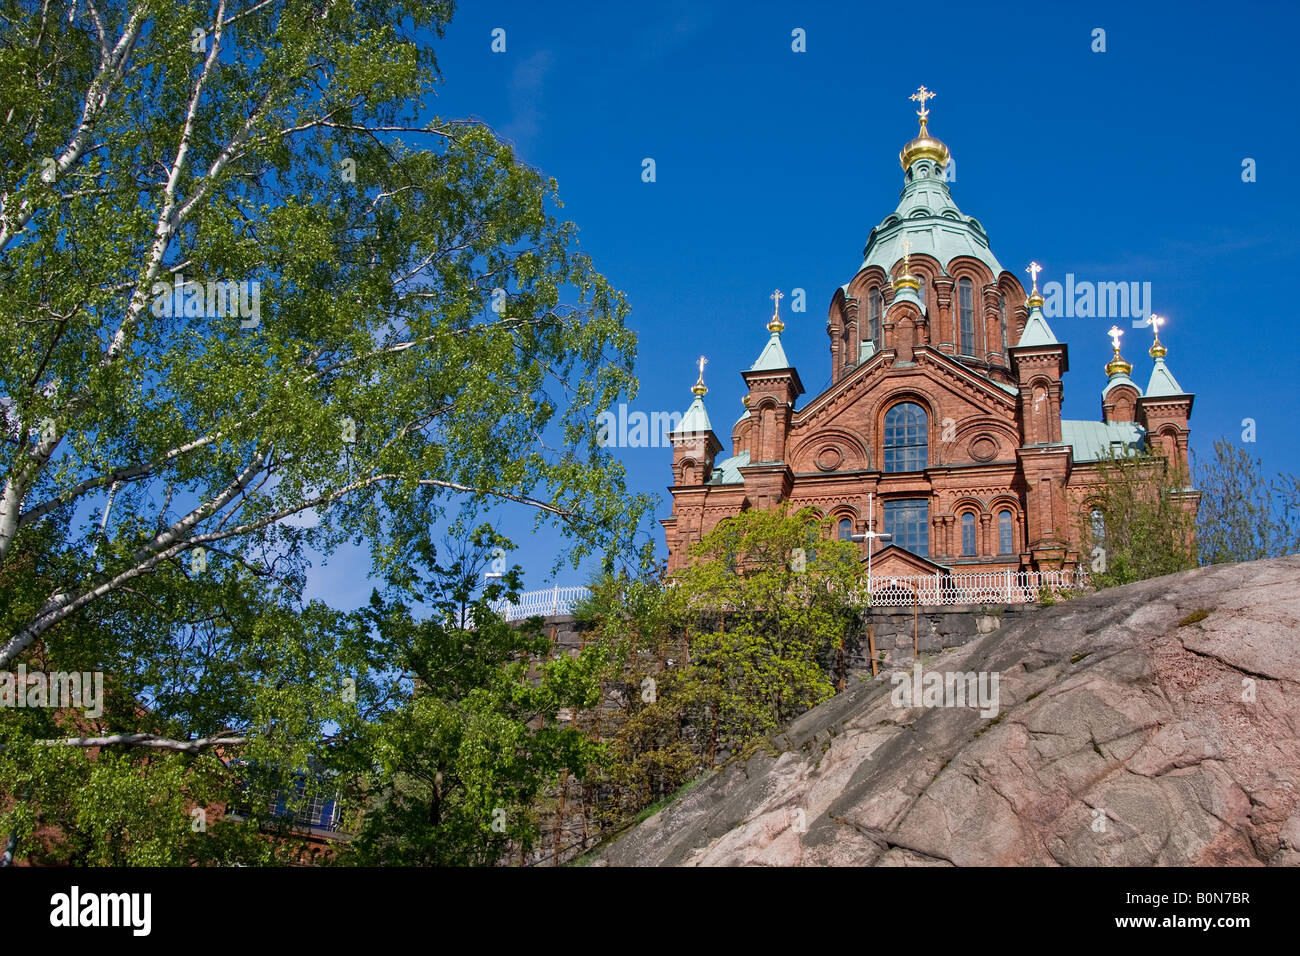 Uspenski-Kathedrale in Helsinki Finnland gebaut 1868 es ist die größte orthodoxe Kathedrale in Westeuropa Stockfoto